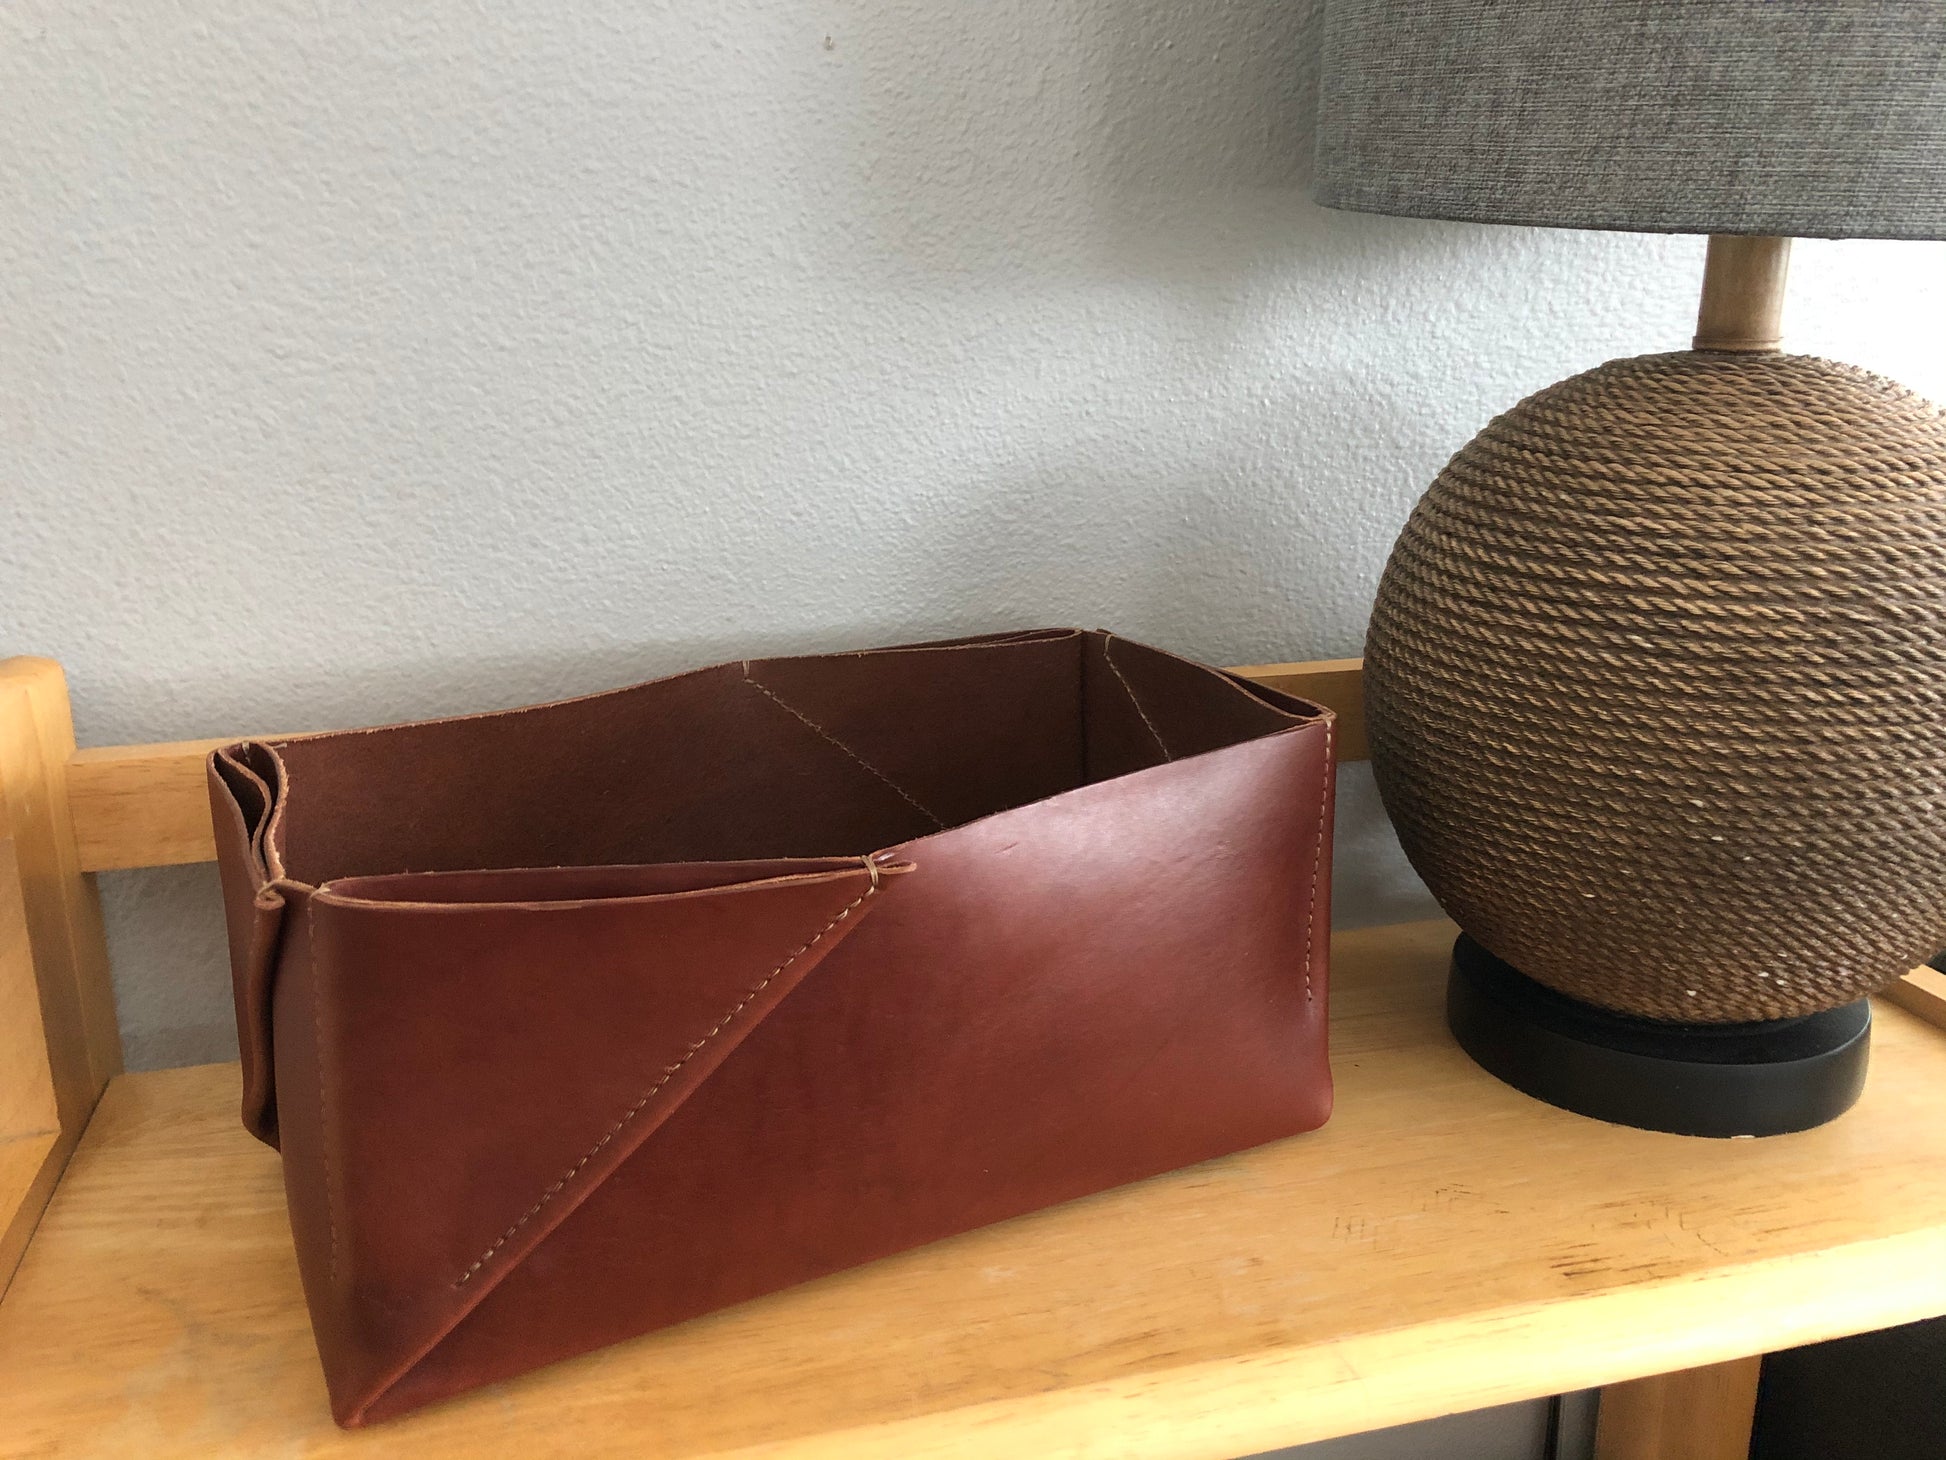 Folded leather box sits on shelf near rustic lamp.